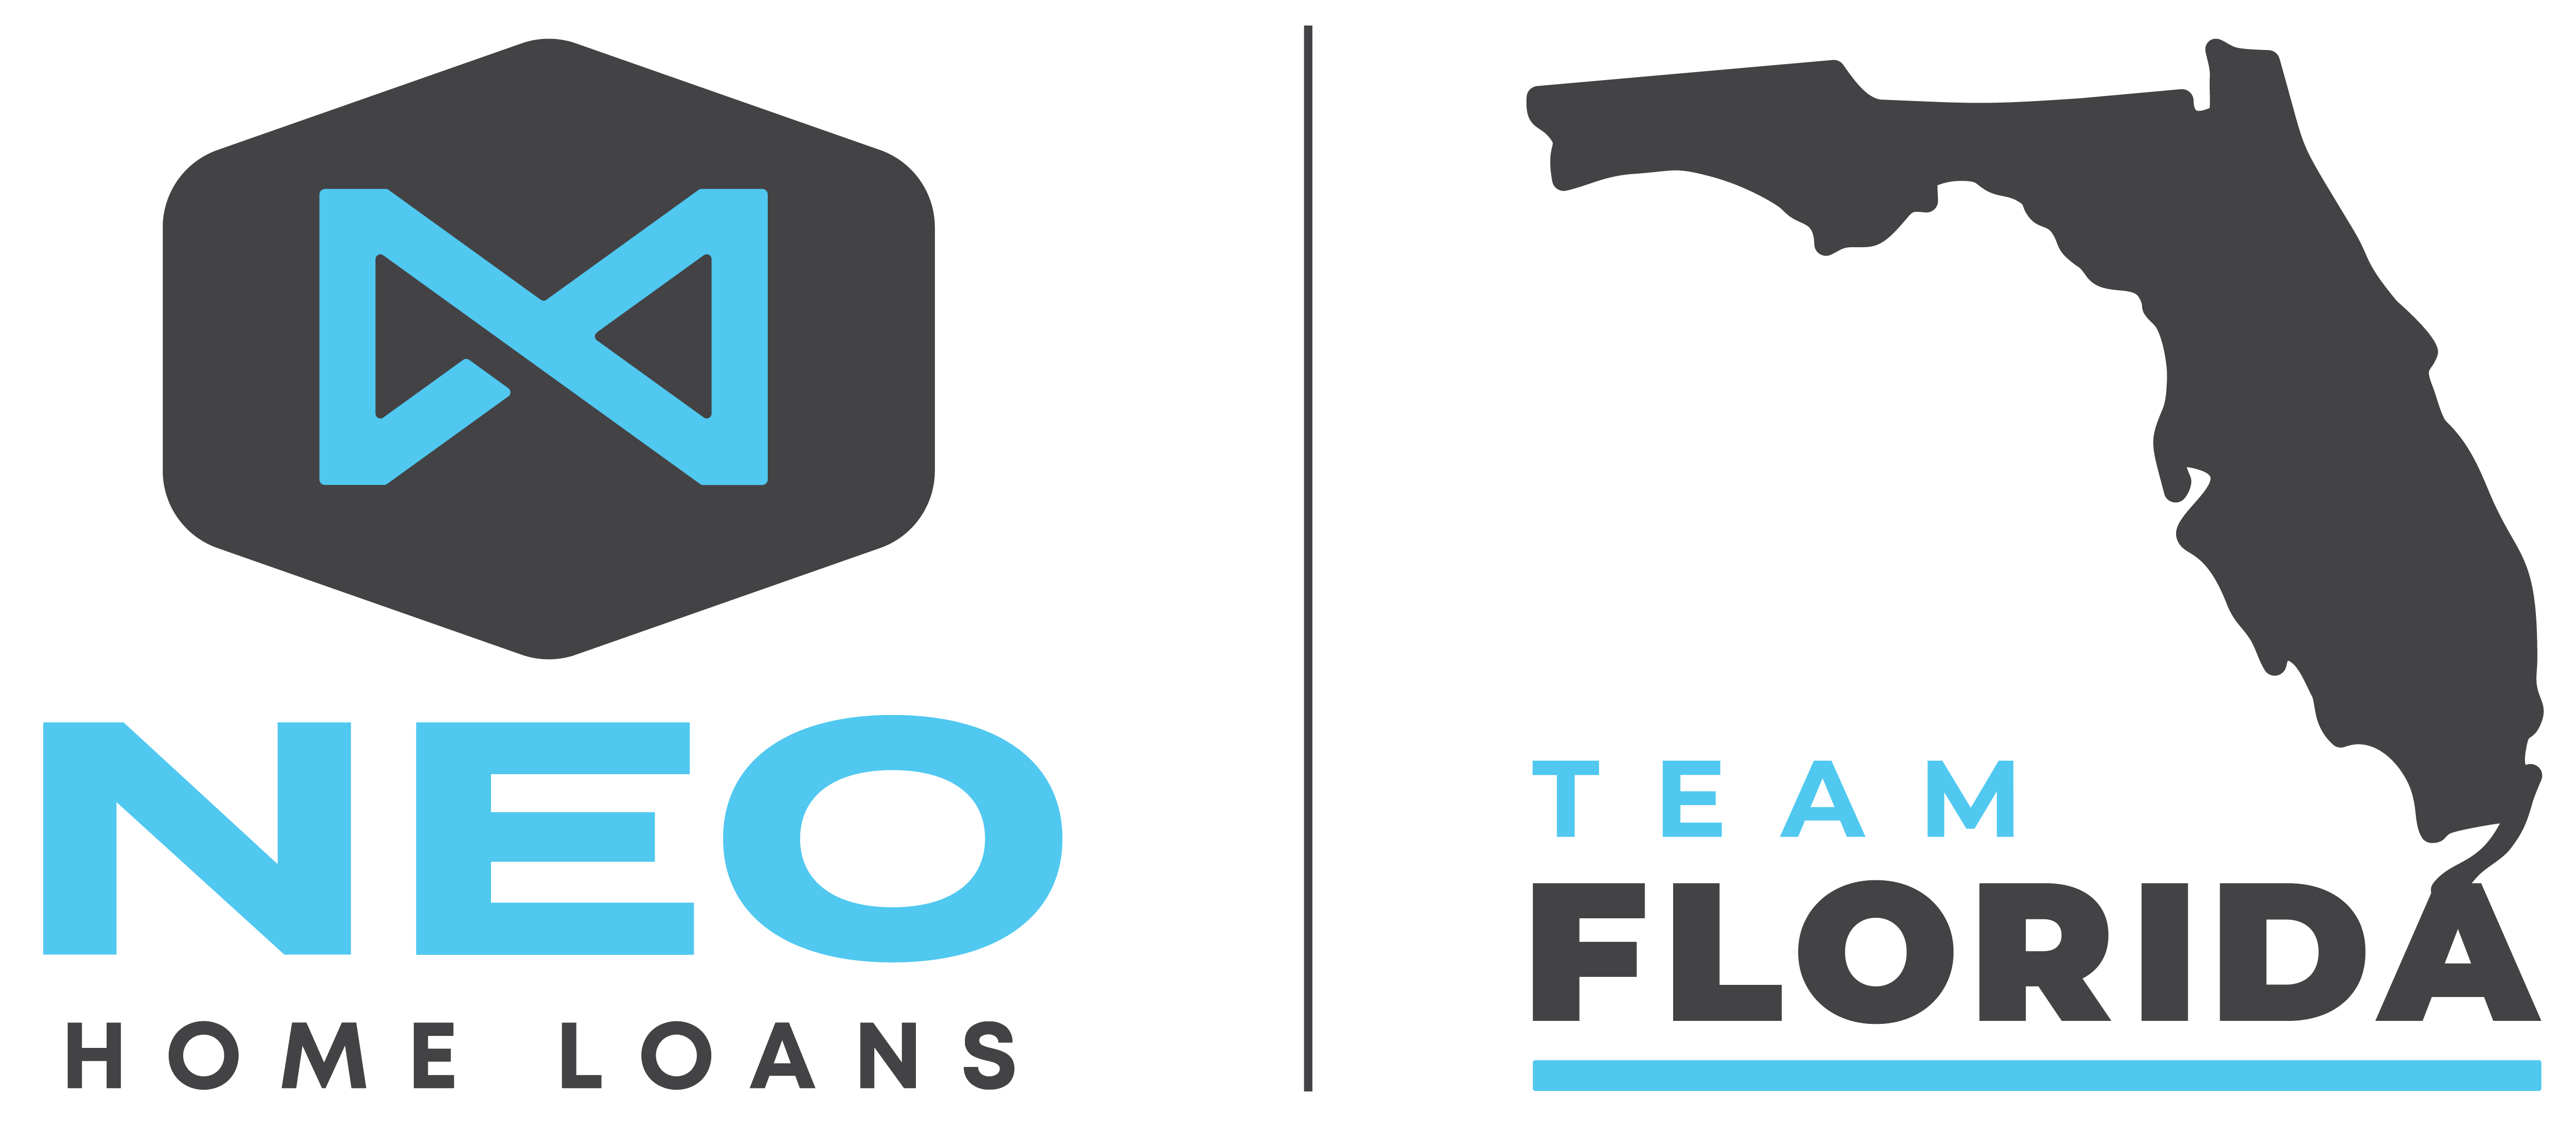 TeamFlorida Stacked logo